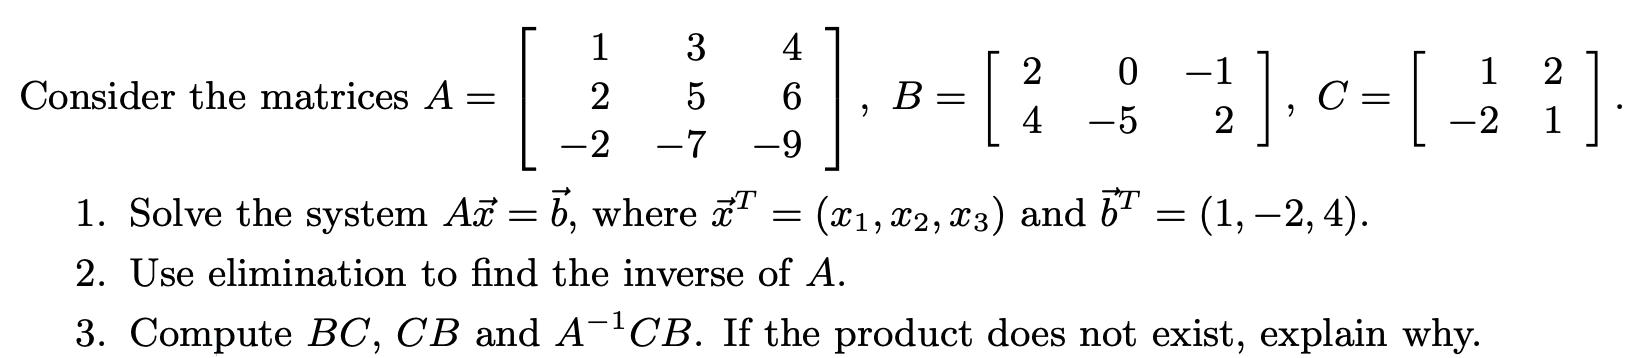 Consider the matrices A = 1 2 -2 3 5 -7 -9 4 {] 6 9 B 2 0 -1 = [  8 -2], 0 = [ 1 2 ] C 4 -5 -2 1 b (x1, x2,